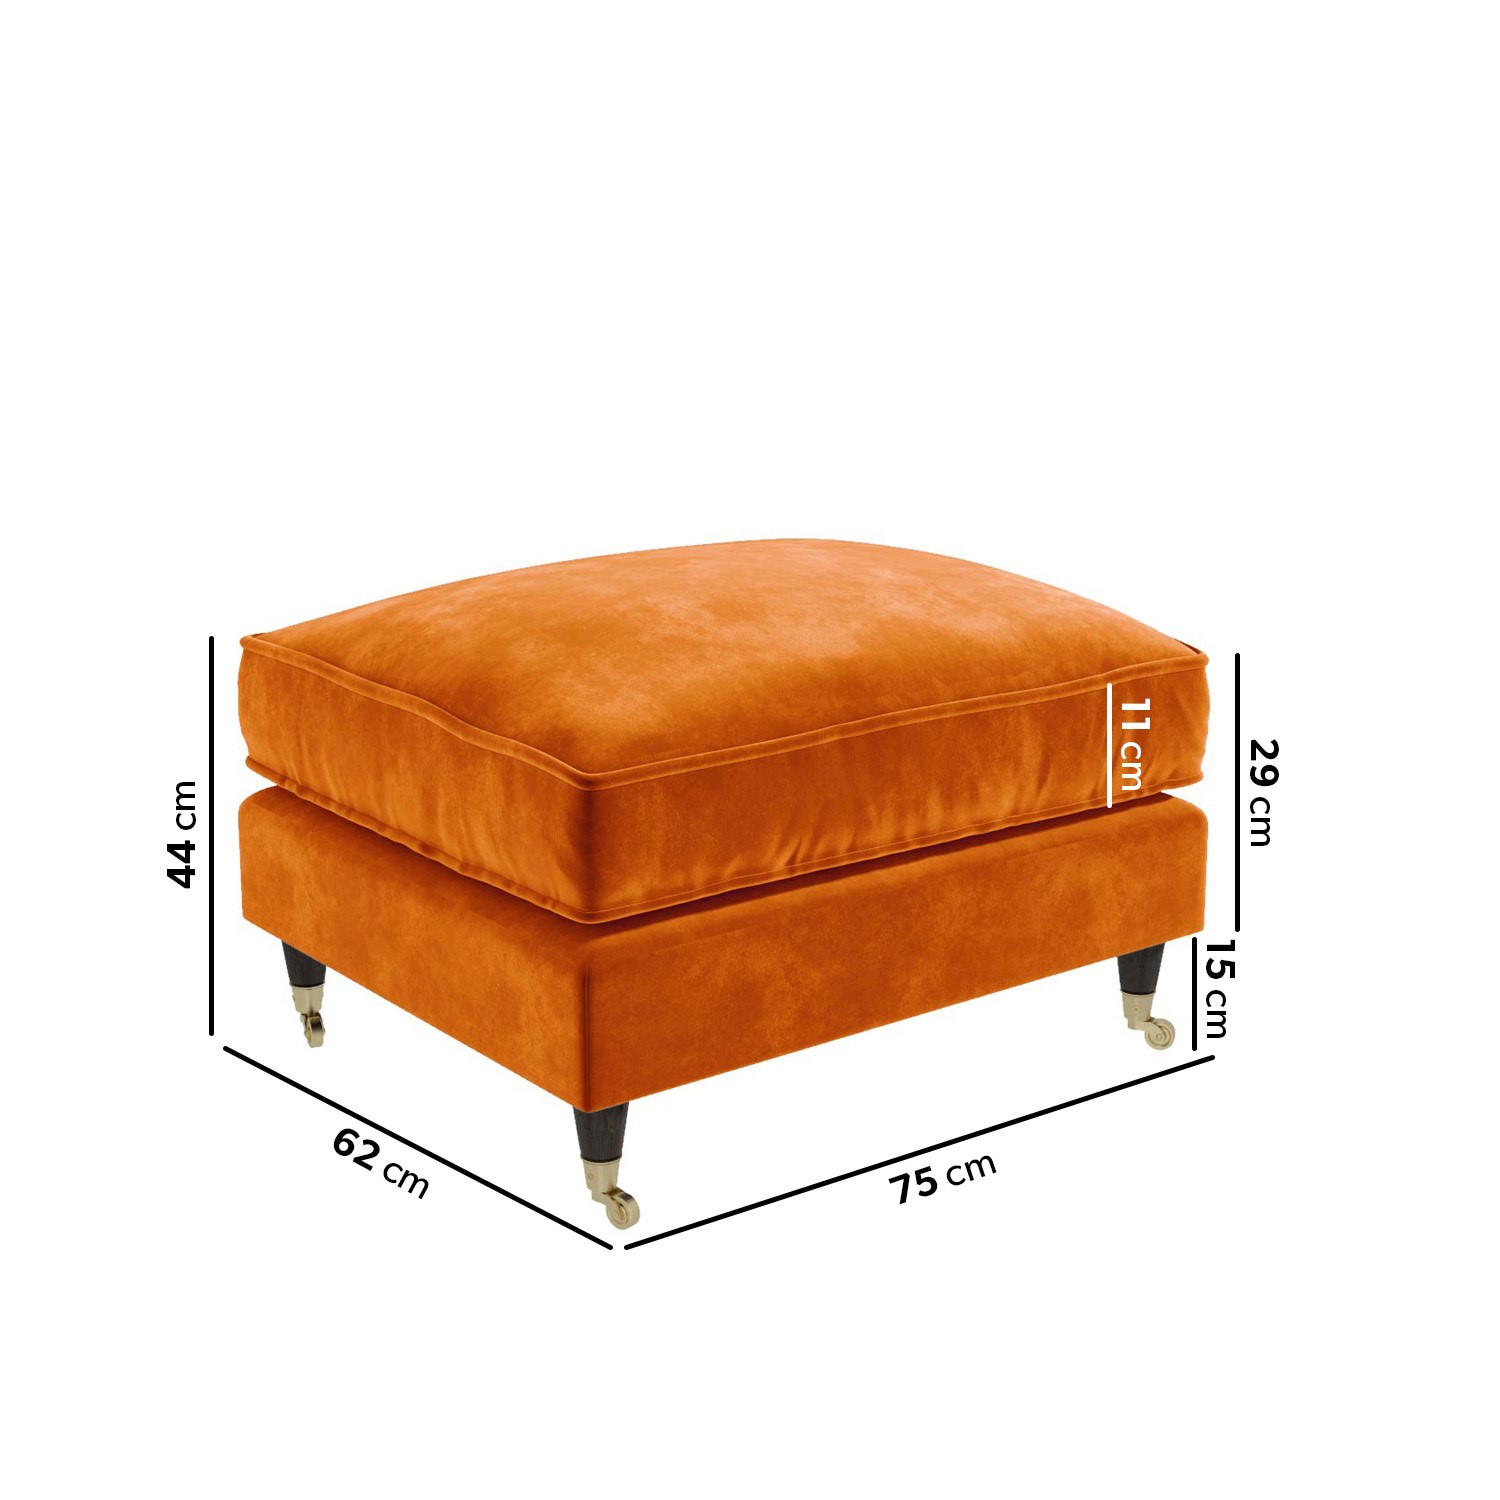 Read more about Orange velvet footstool payton